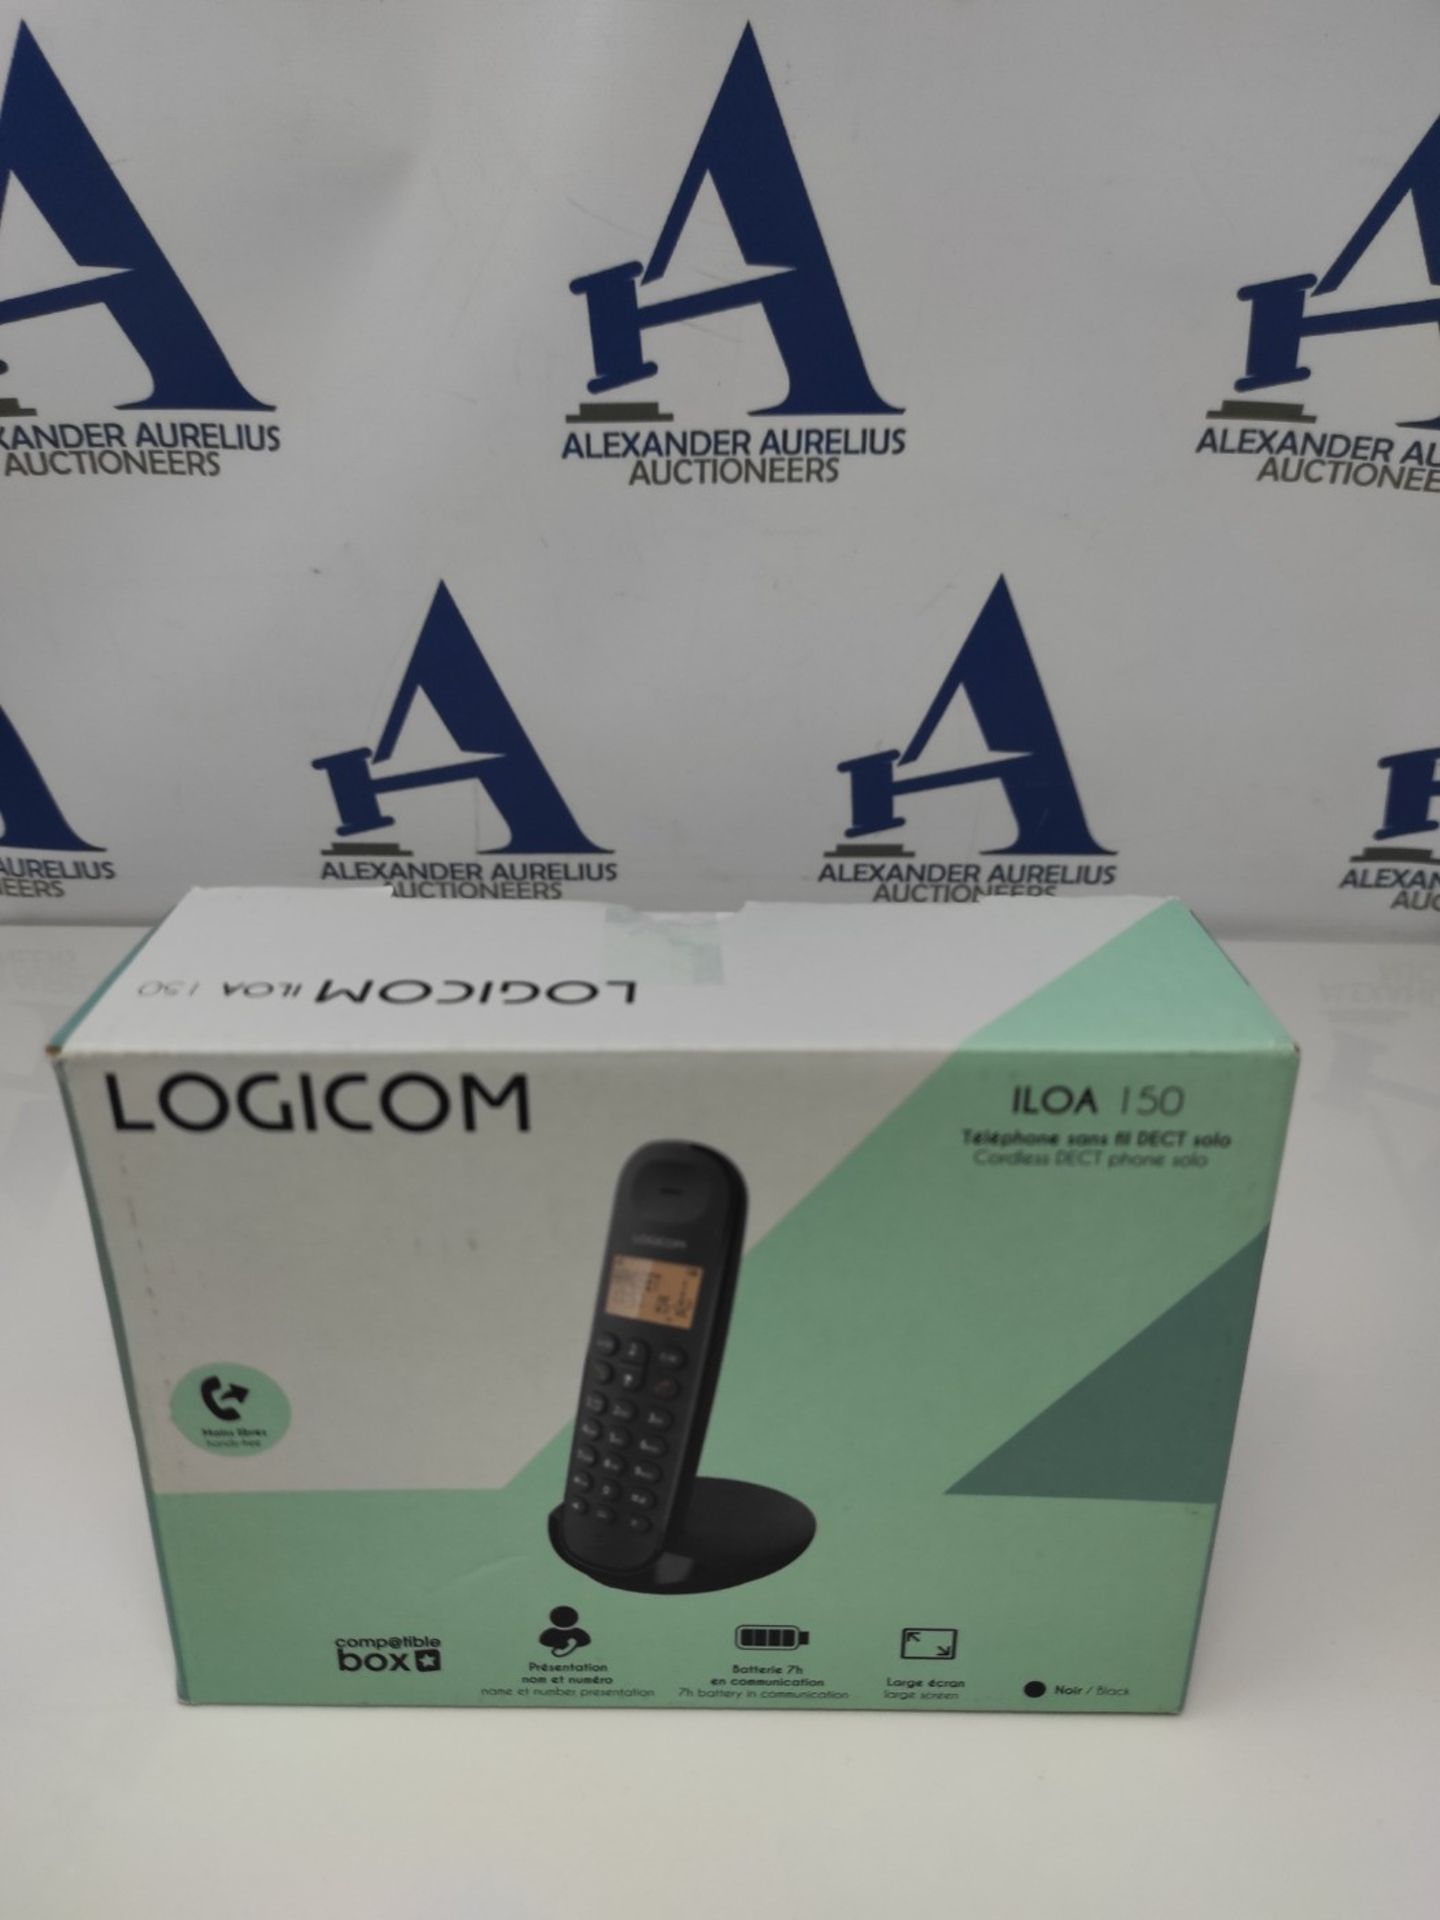 Logicom ILOA 150 Cordless Fixed Telephone without Answering Machine - Solo - Analog an - Image 2 of 6